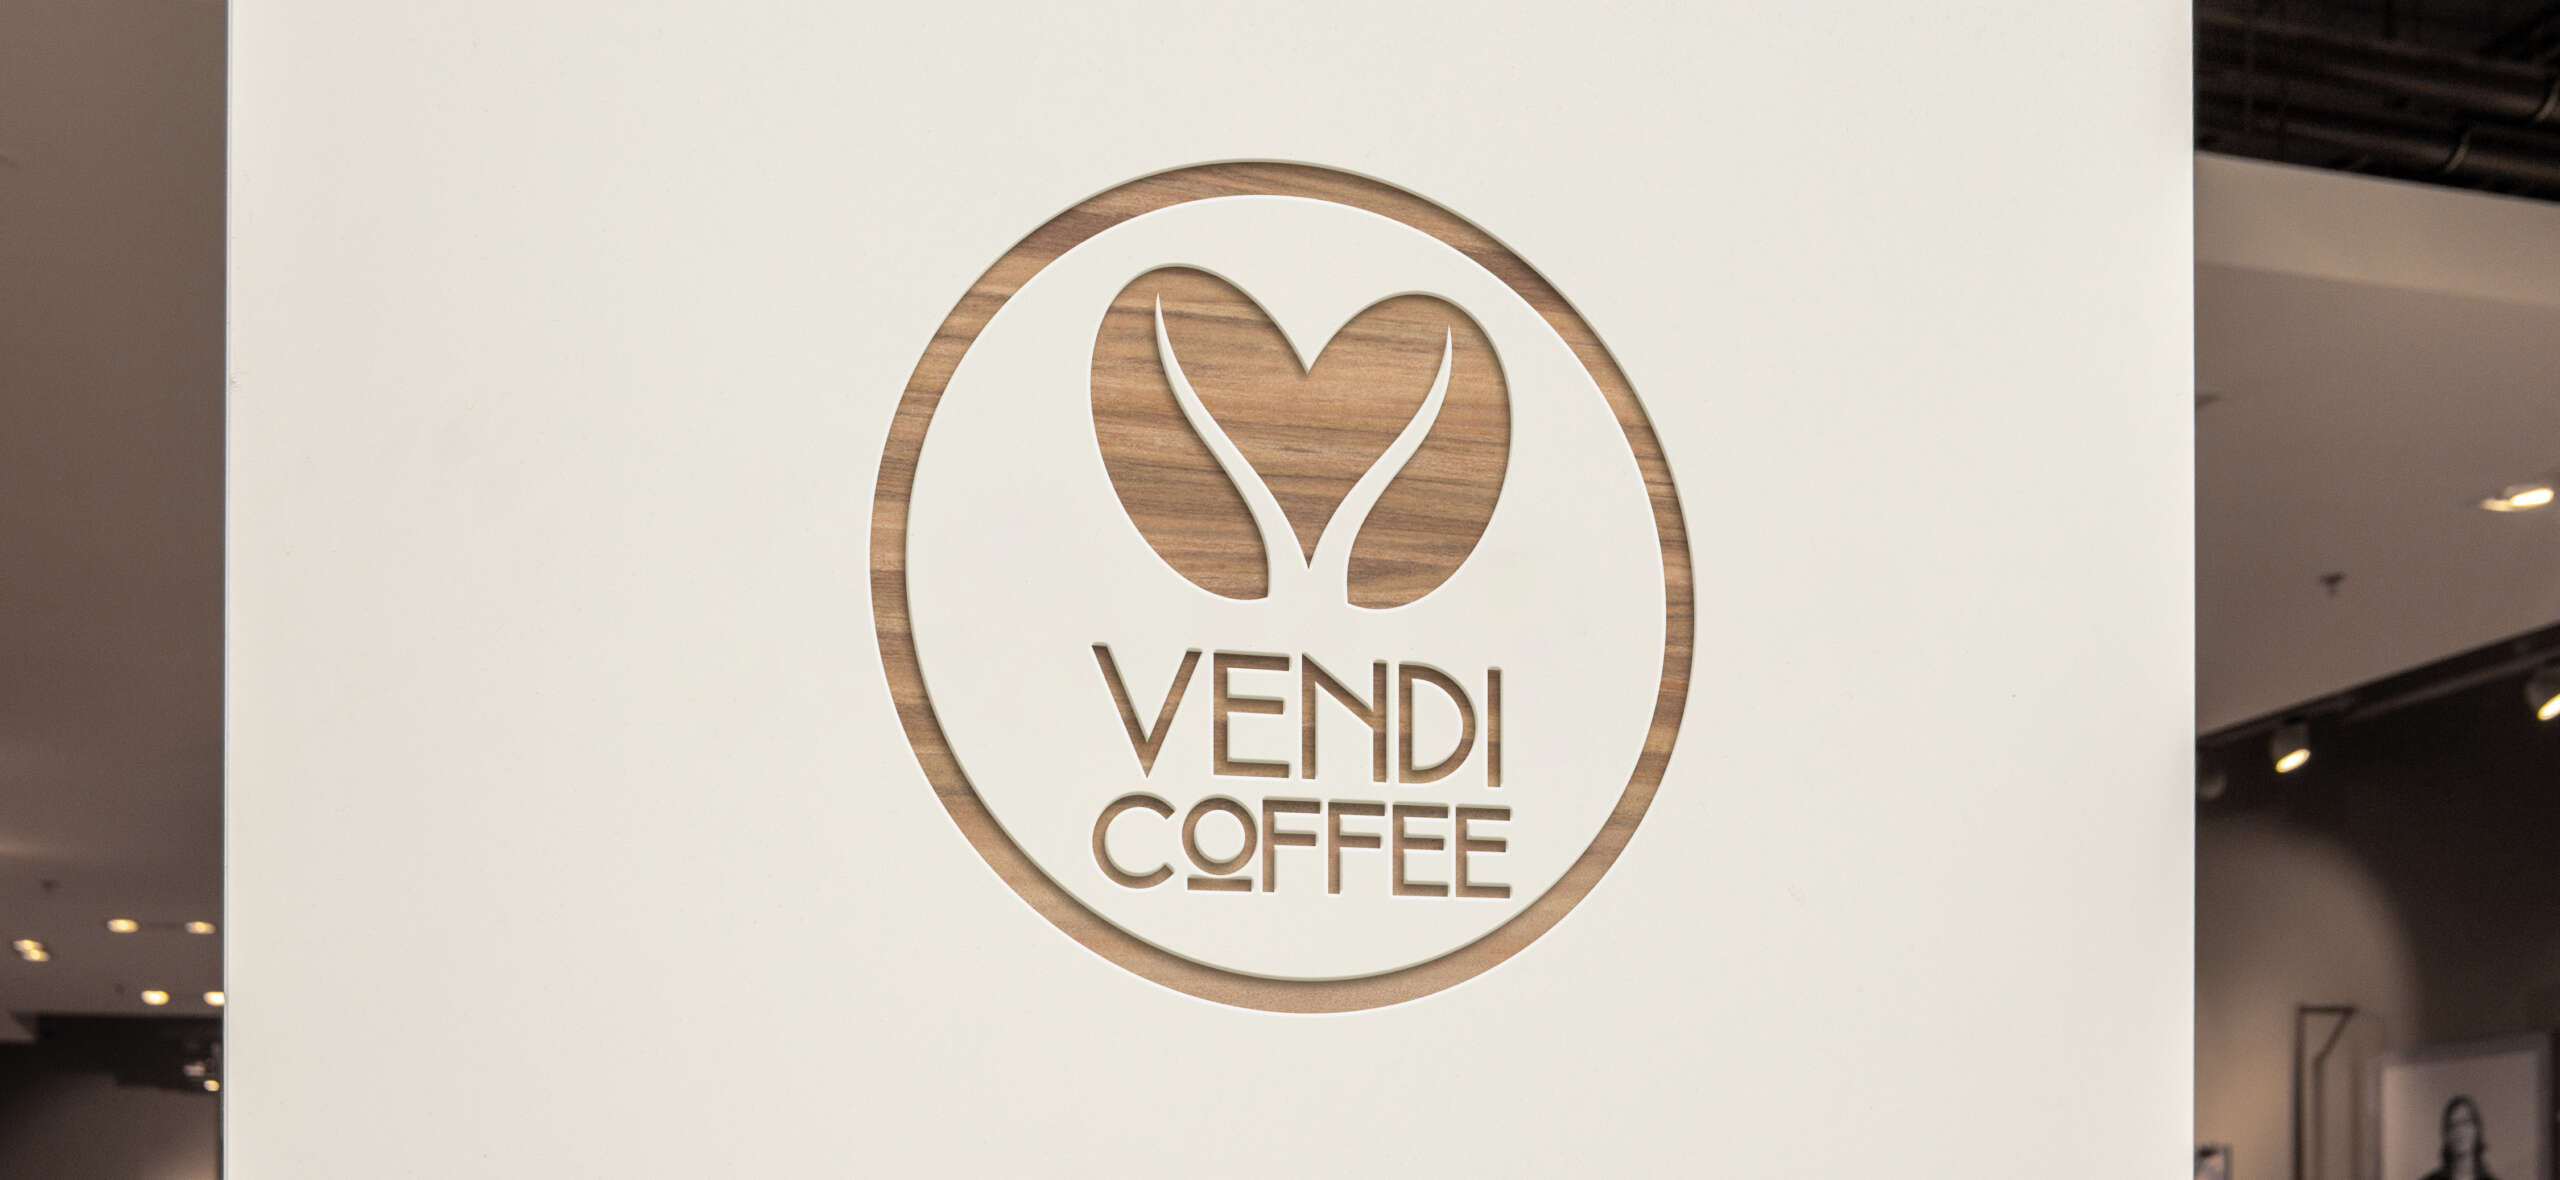 Vendi coffee logo on a wood accent wall